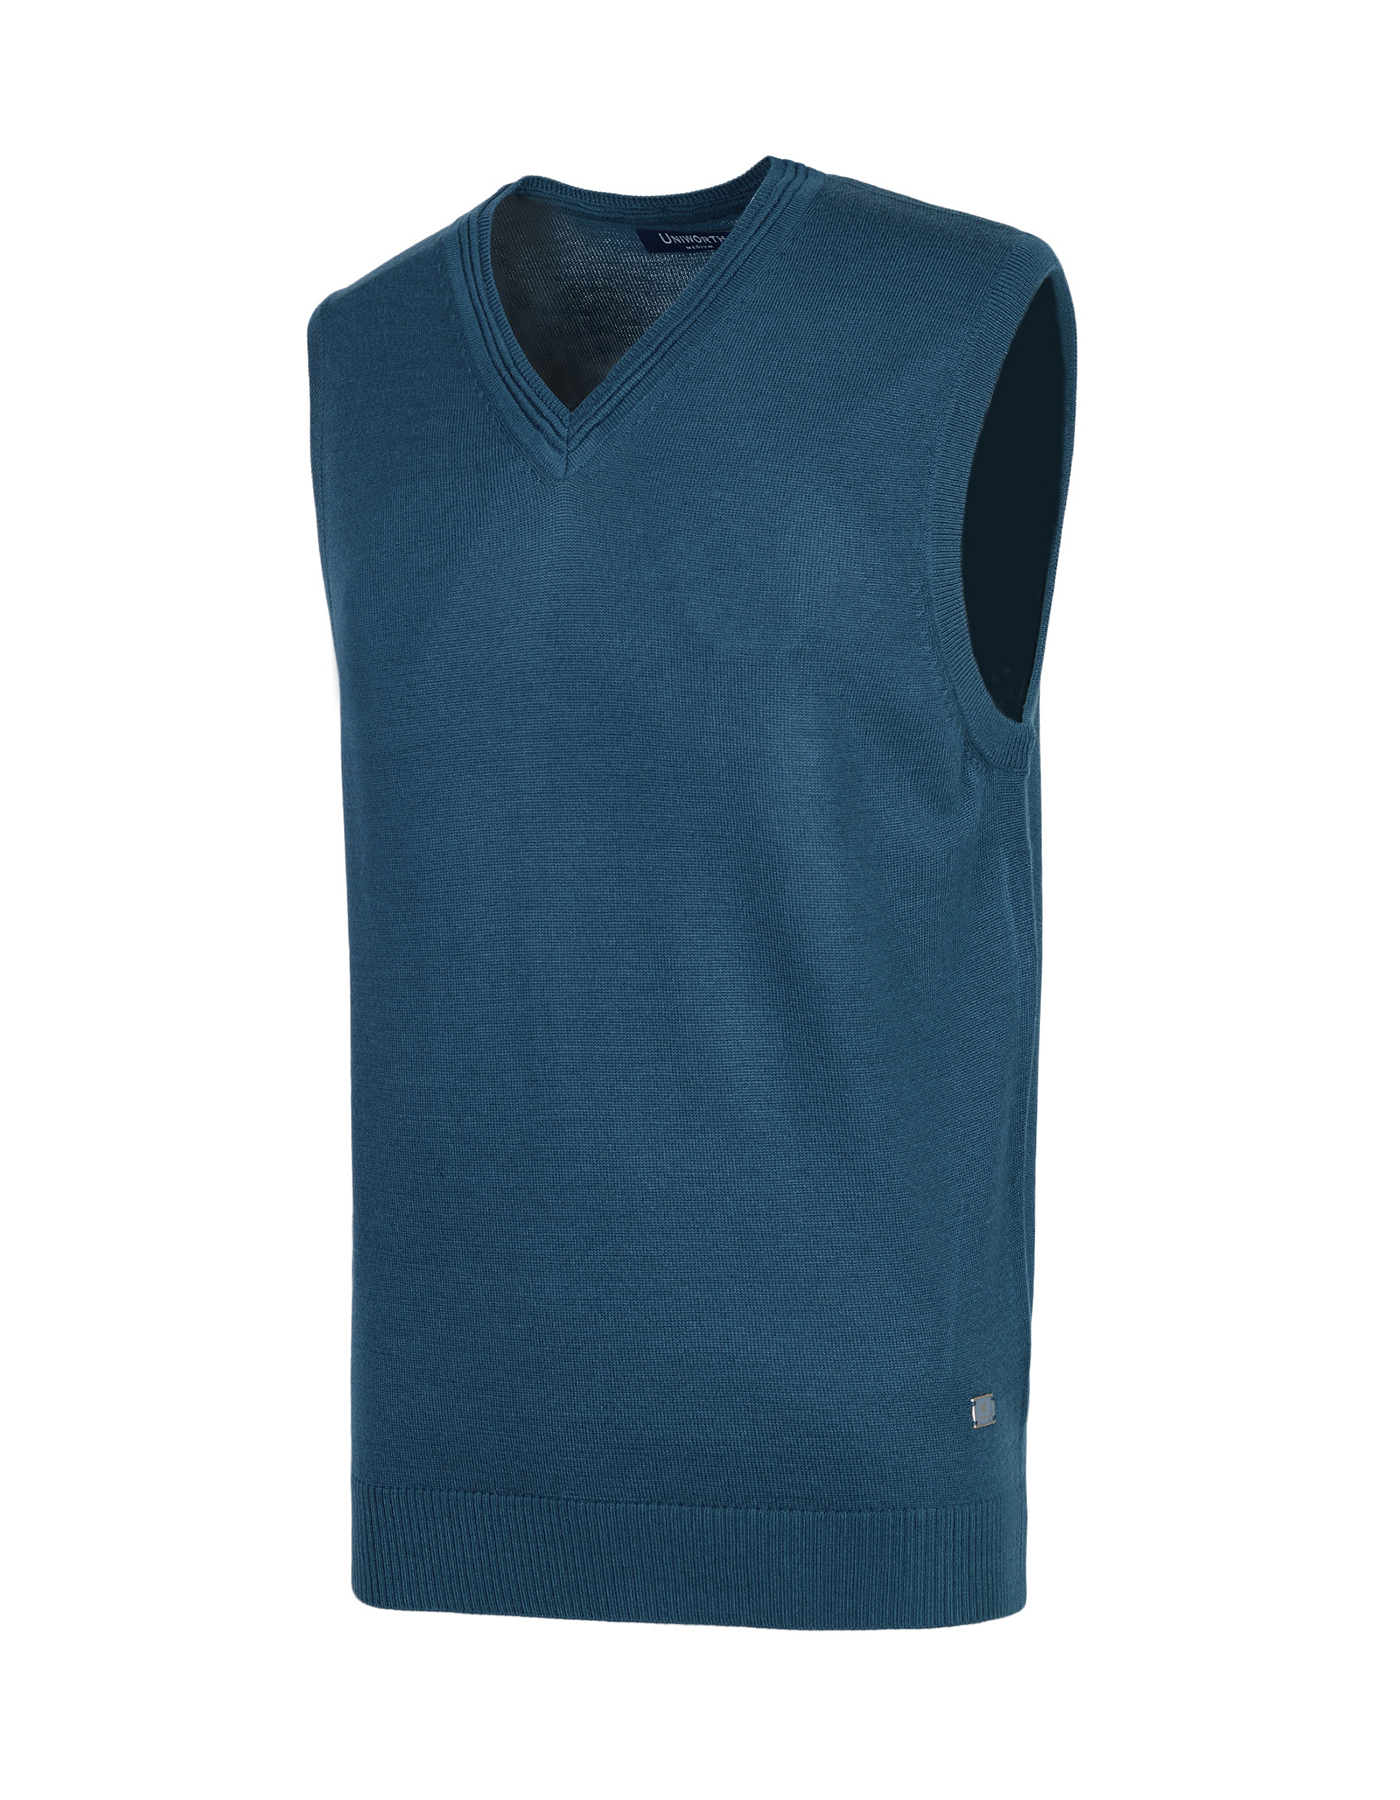 Teal Blue Plain Sleeveless Sweater